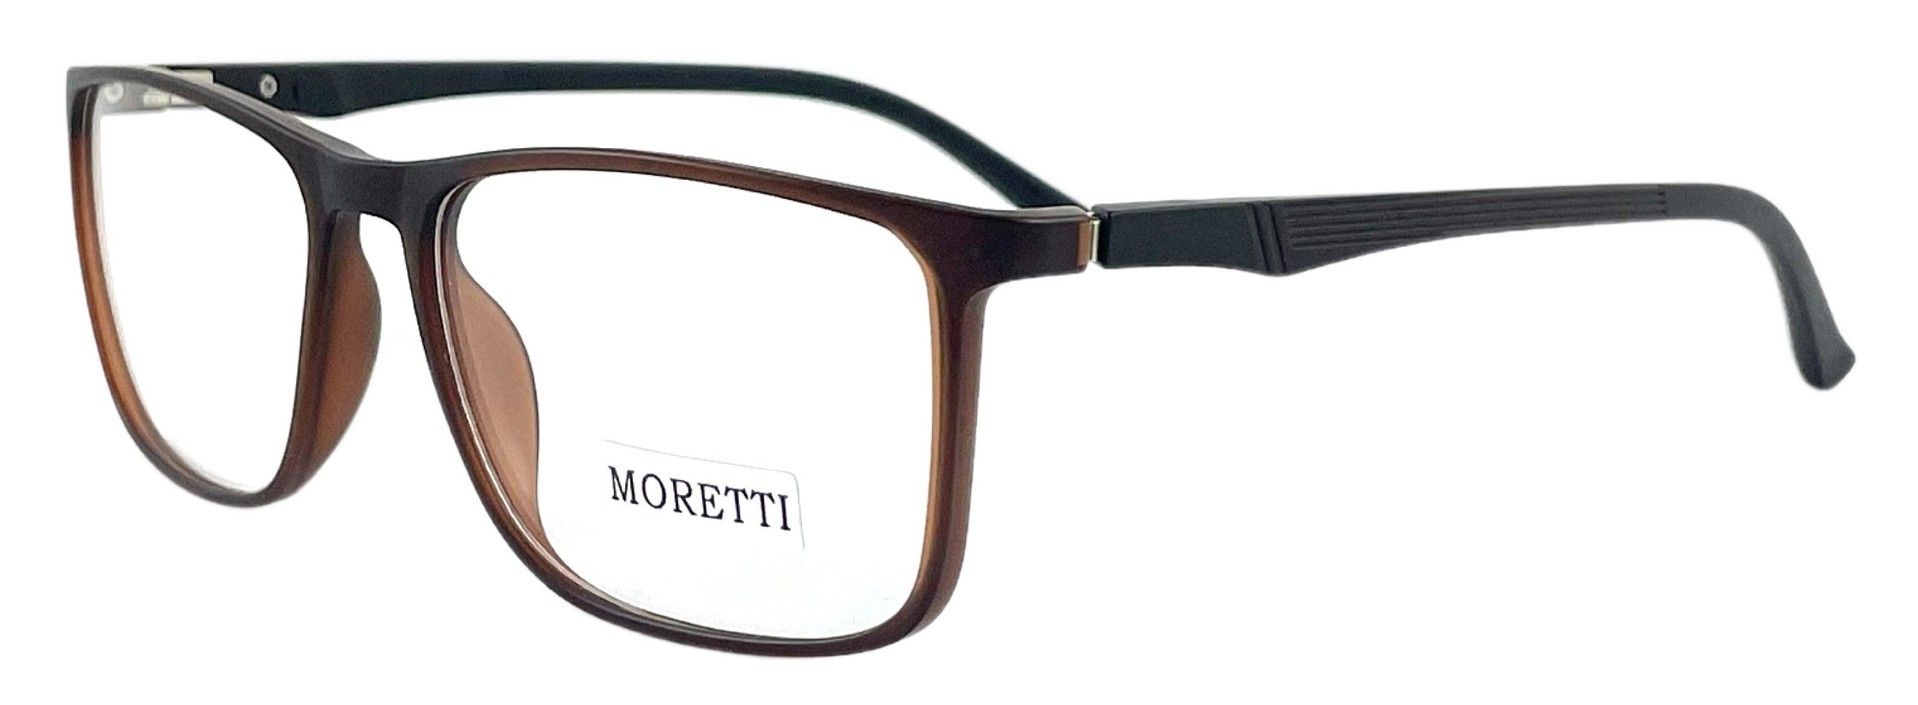 Moretti 2001 C4 2